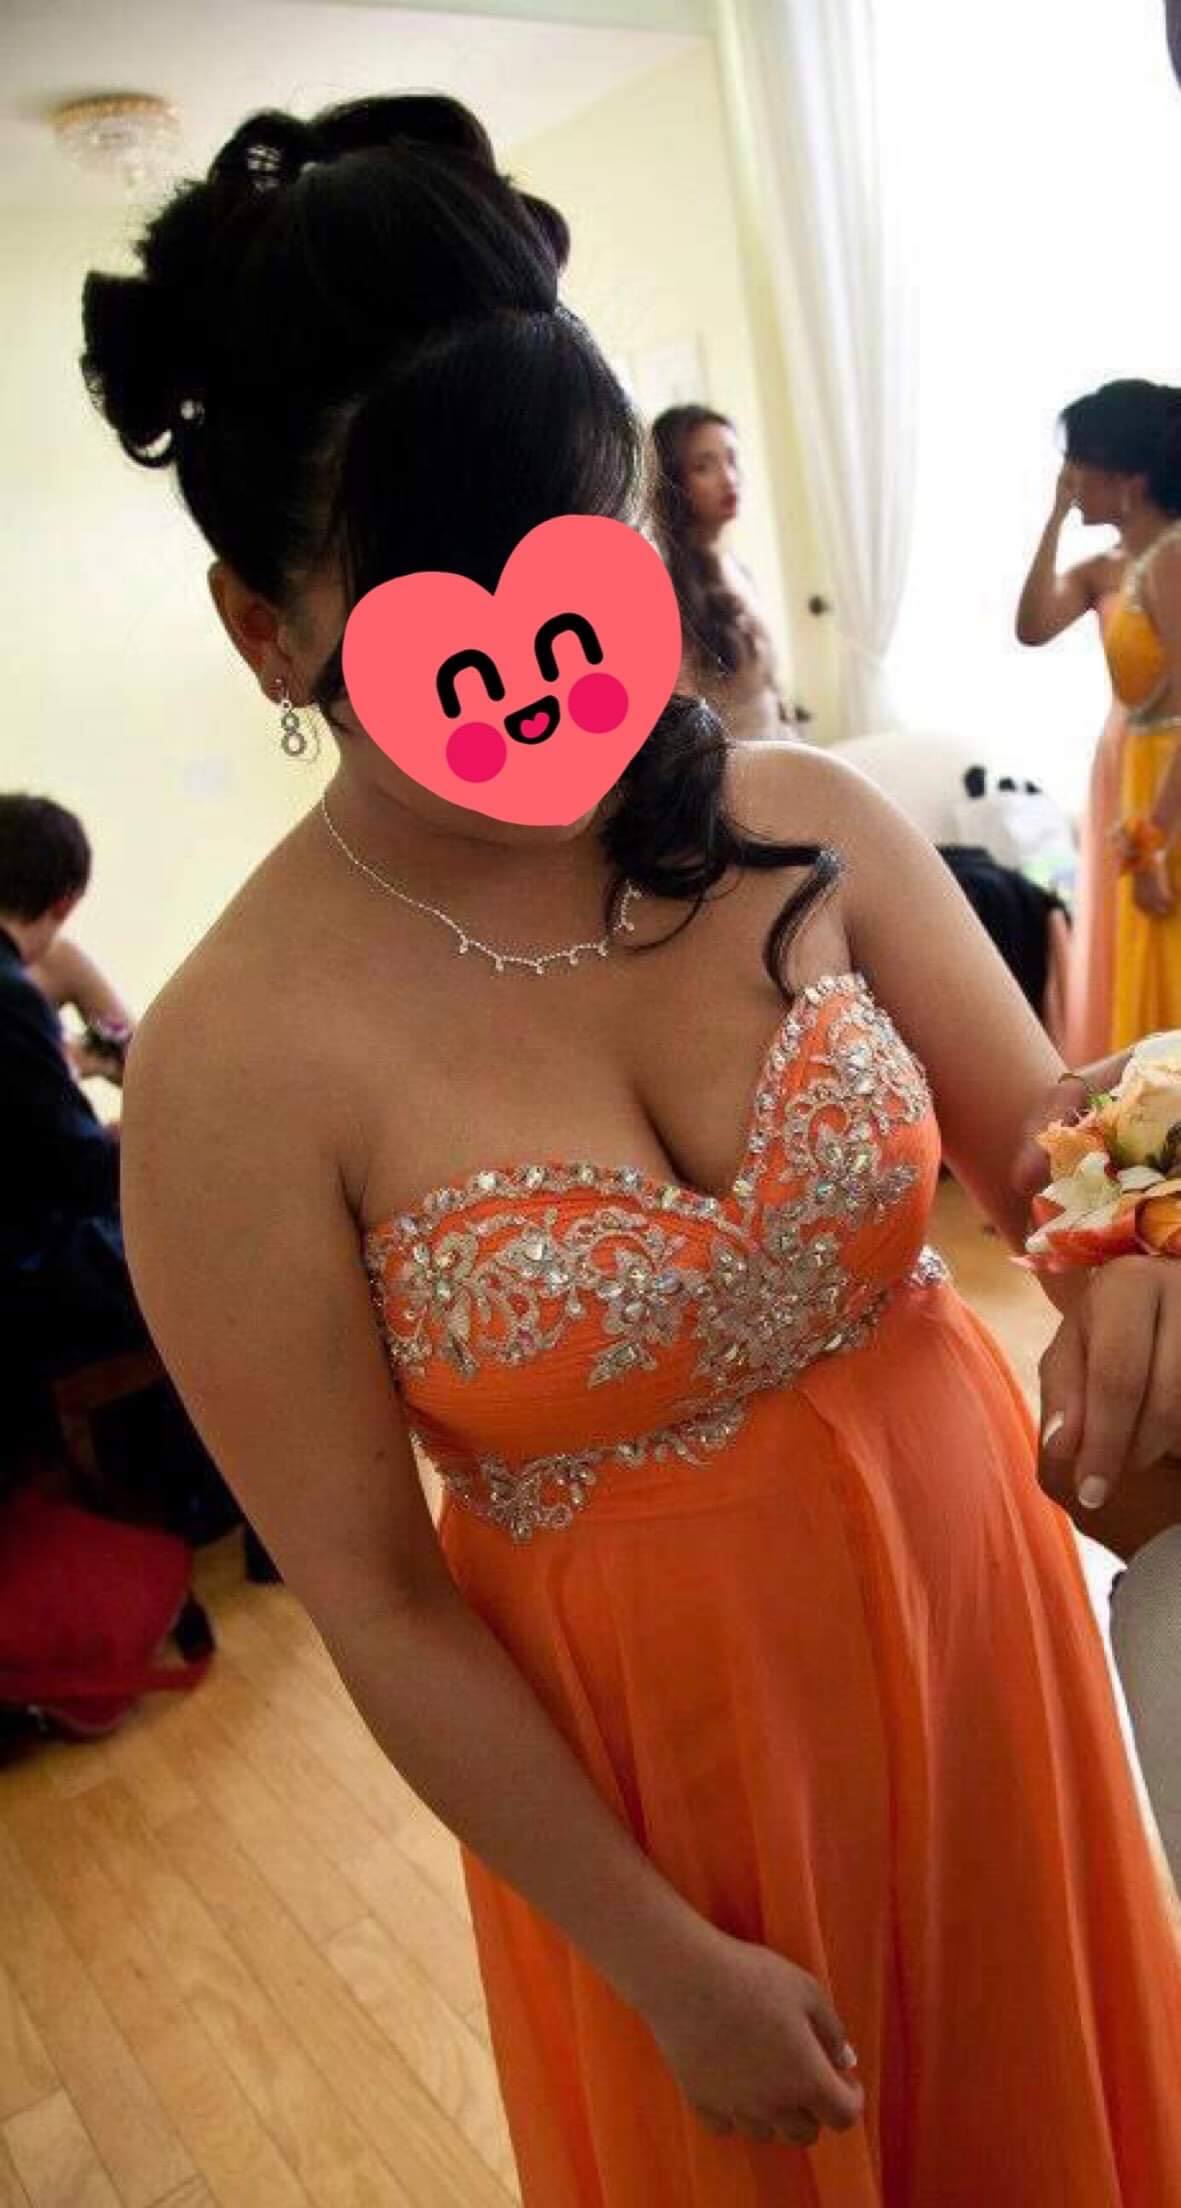 Orange Size 8 Straight Dress on Queenly